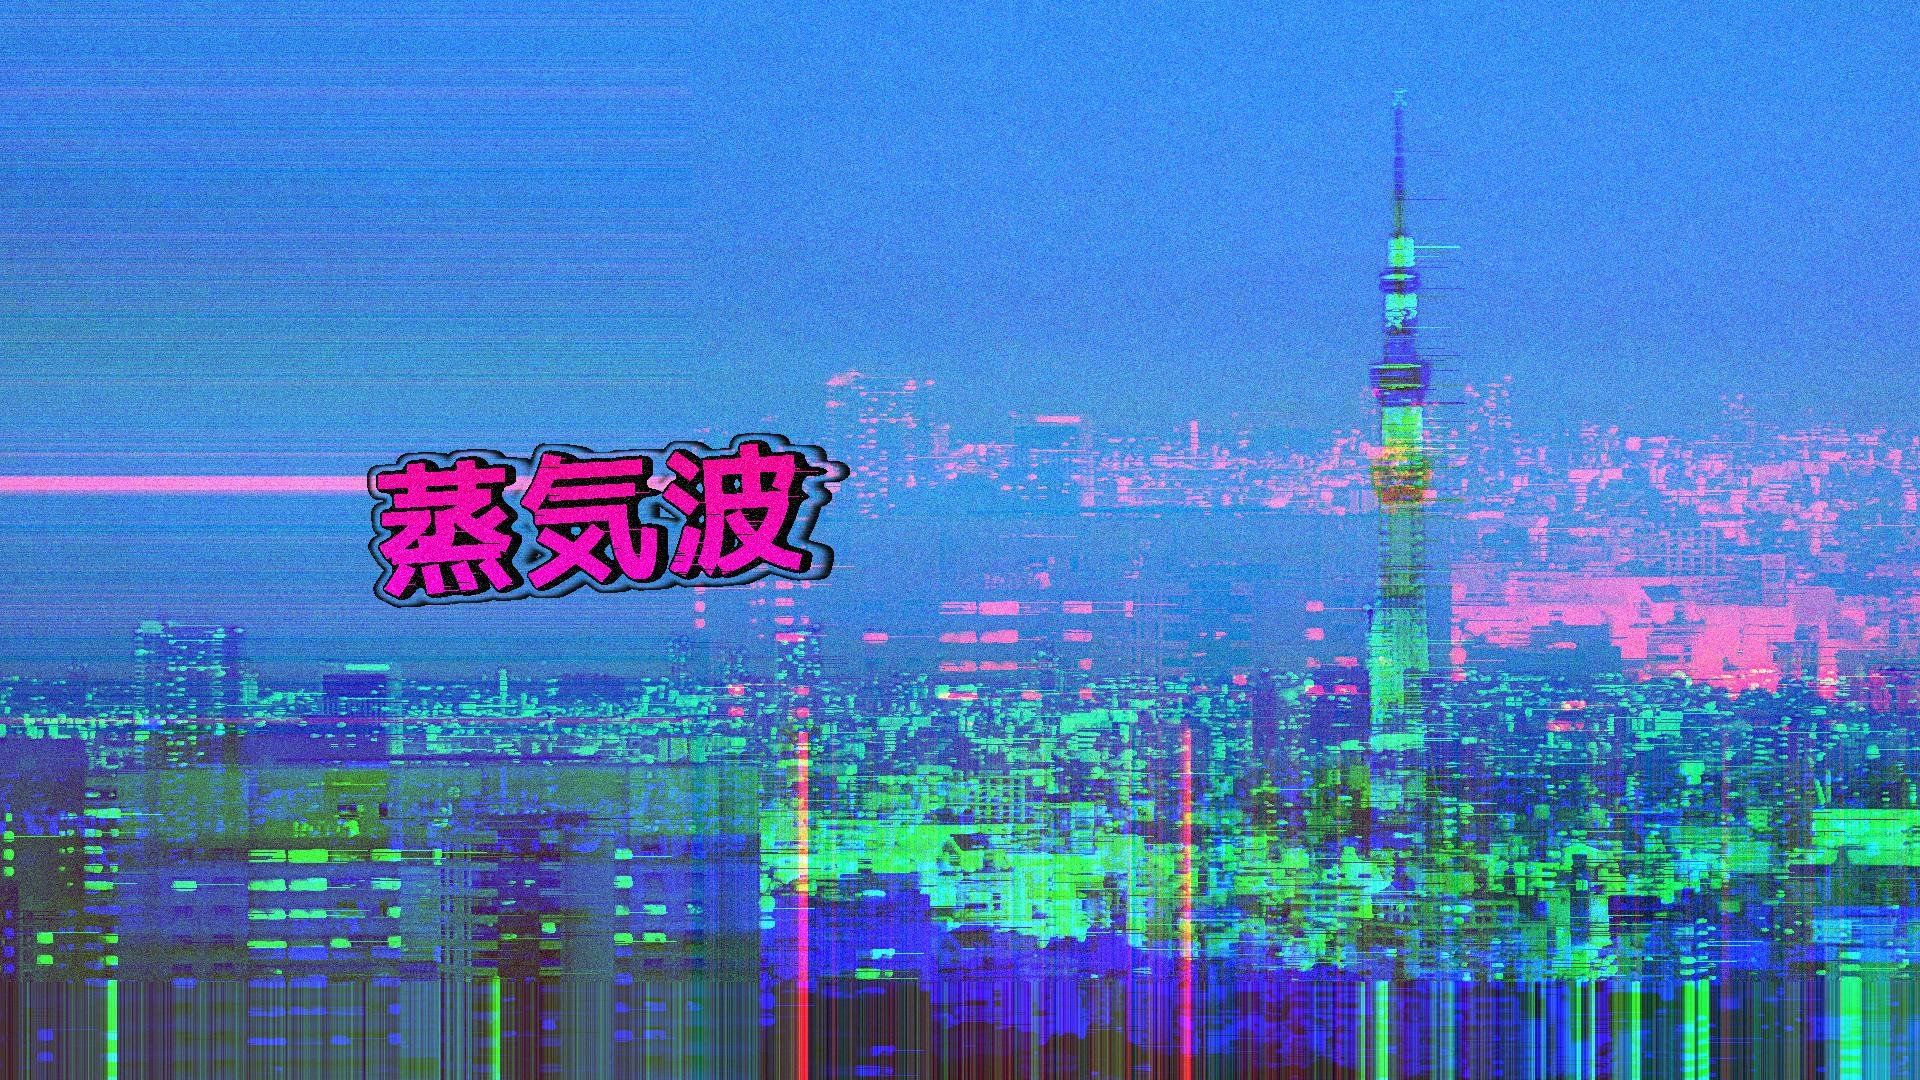 Vaporwave City Background